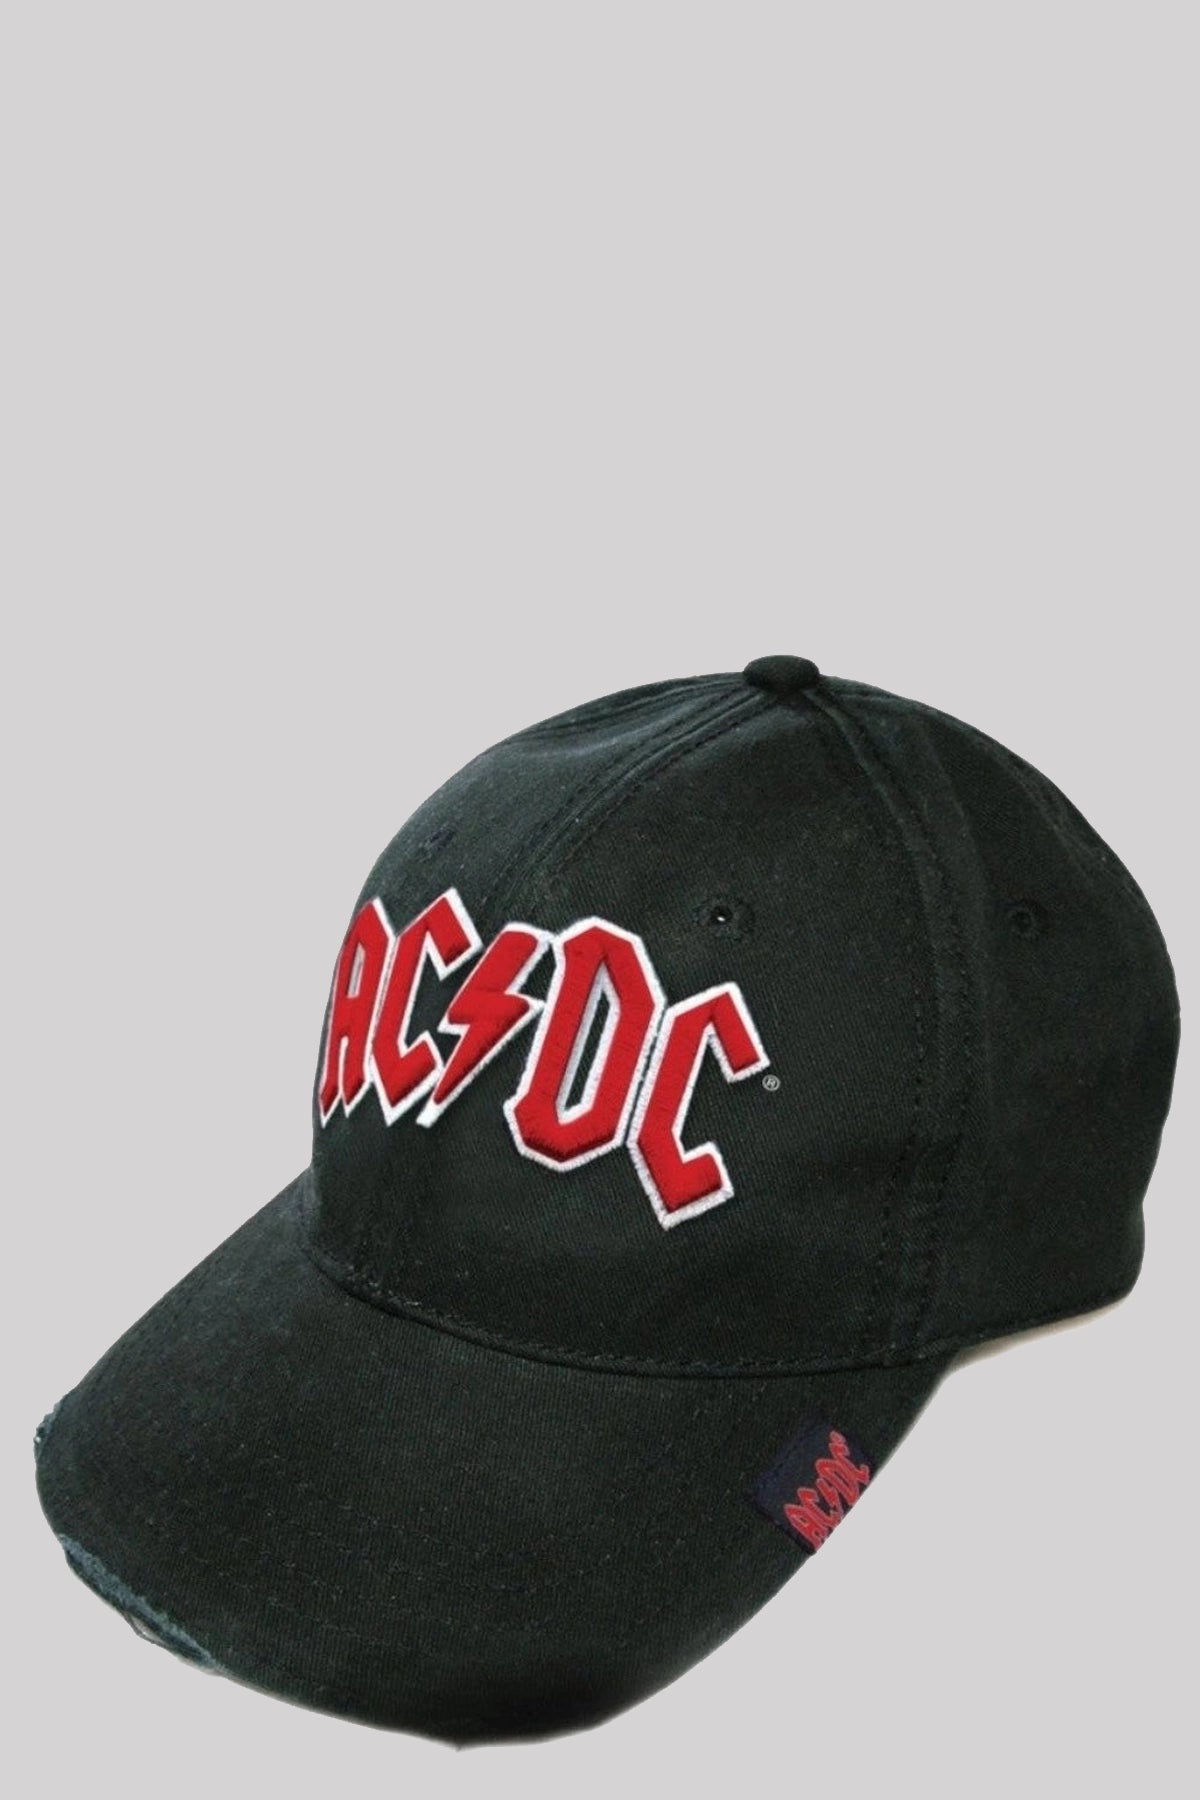 AC/DC Unisex Baseball Cap: Red Logo